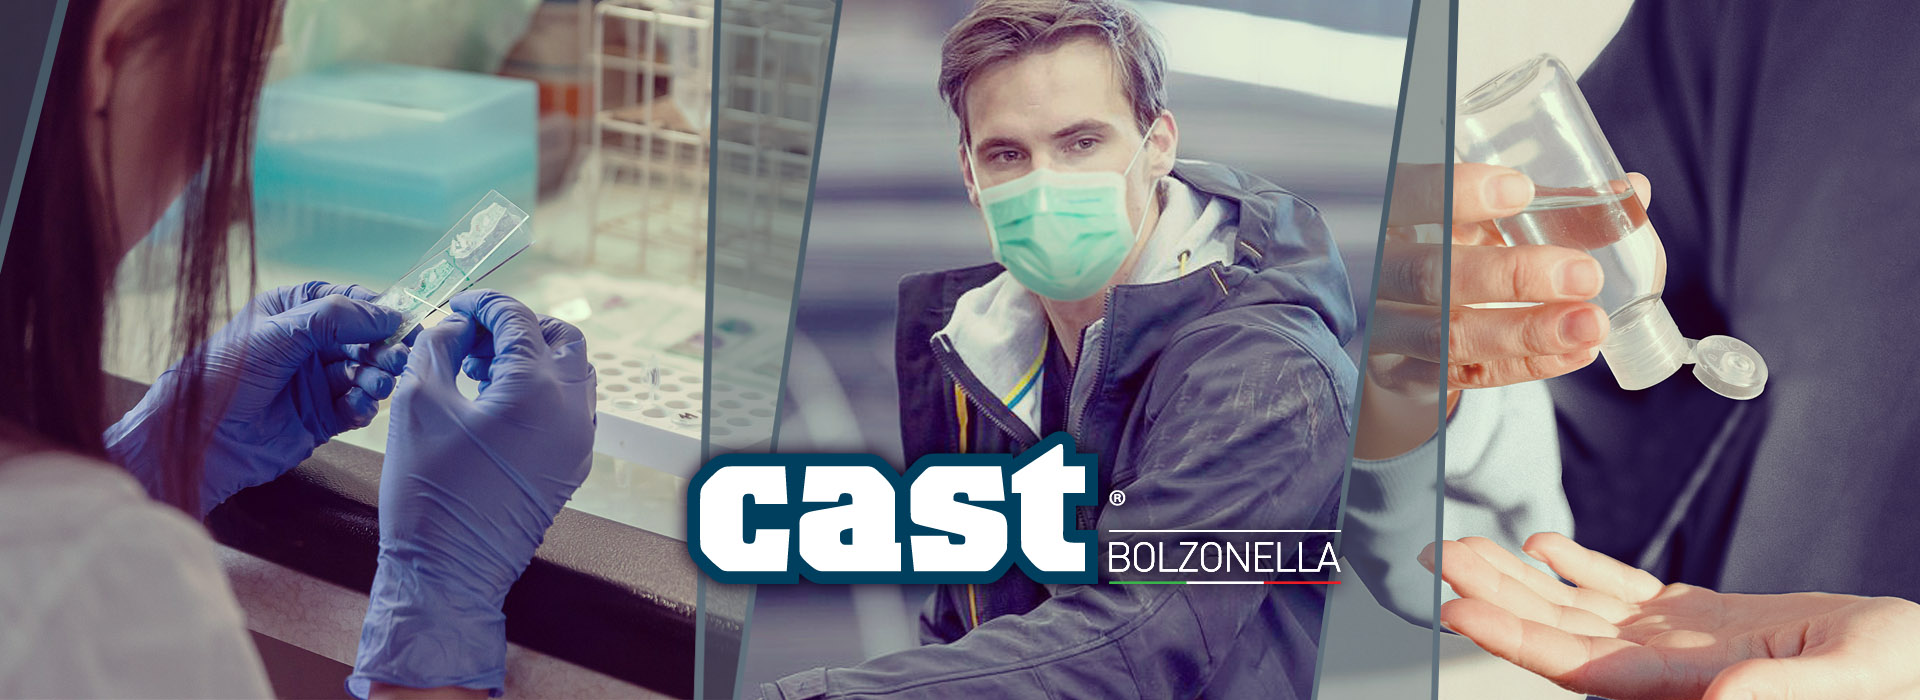 Disposable surgical masks | Cast Bolzonella